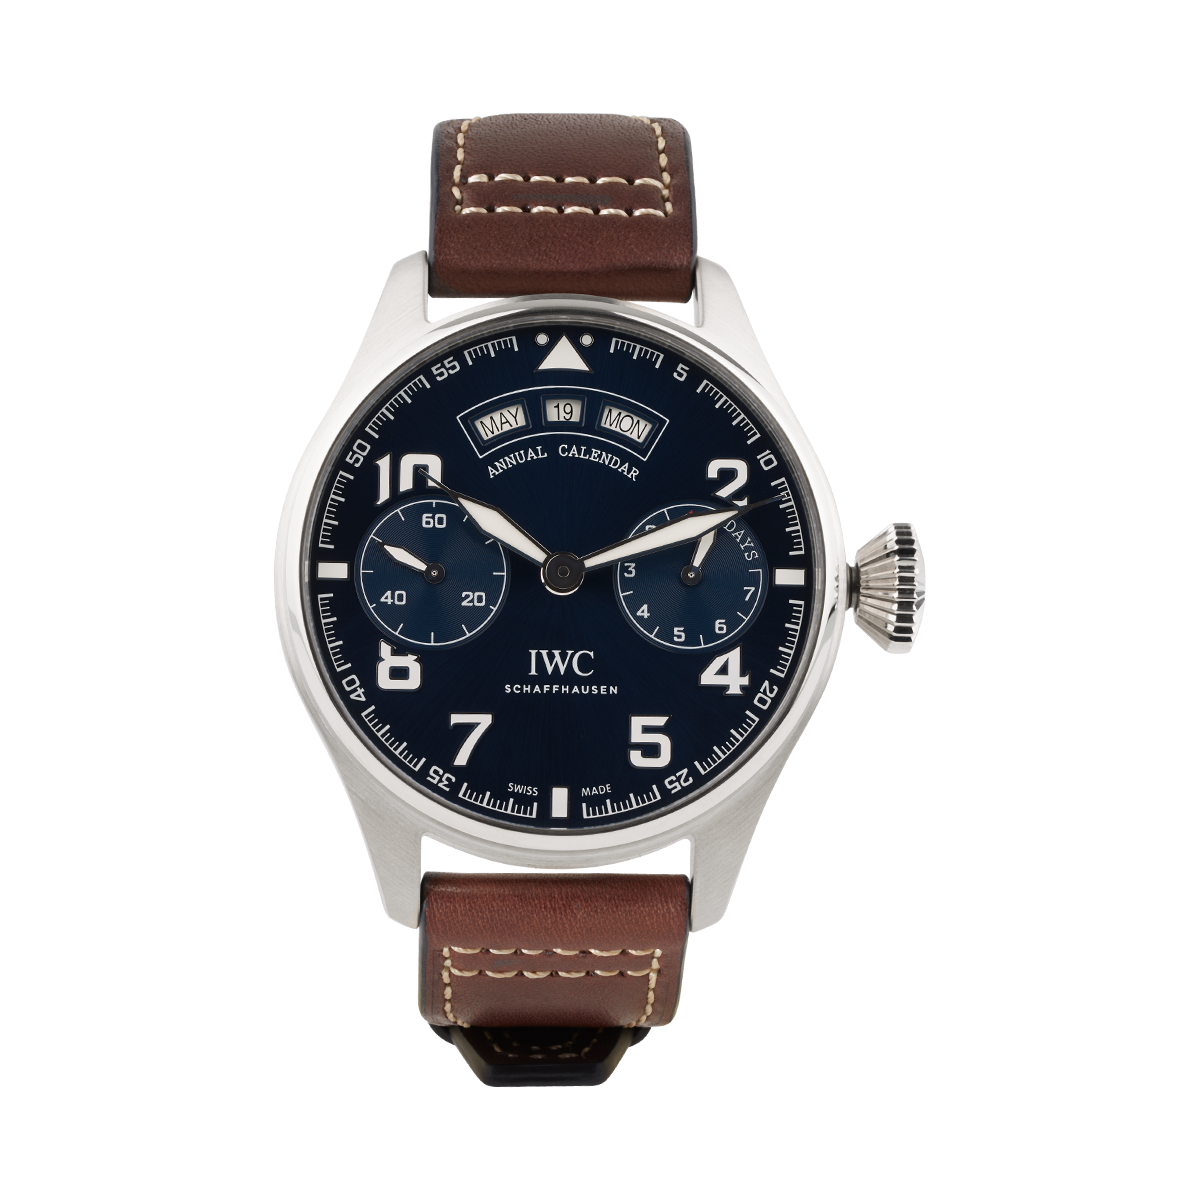 Certified Pre-owned Pilot's Watch Jahreskalender Edition 